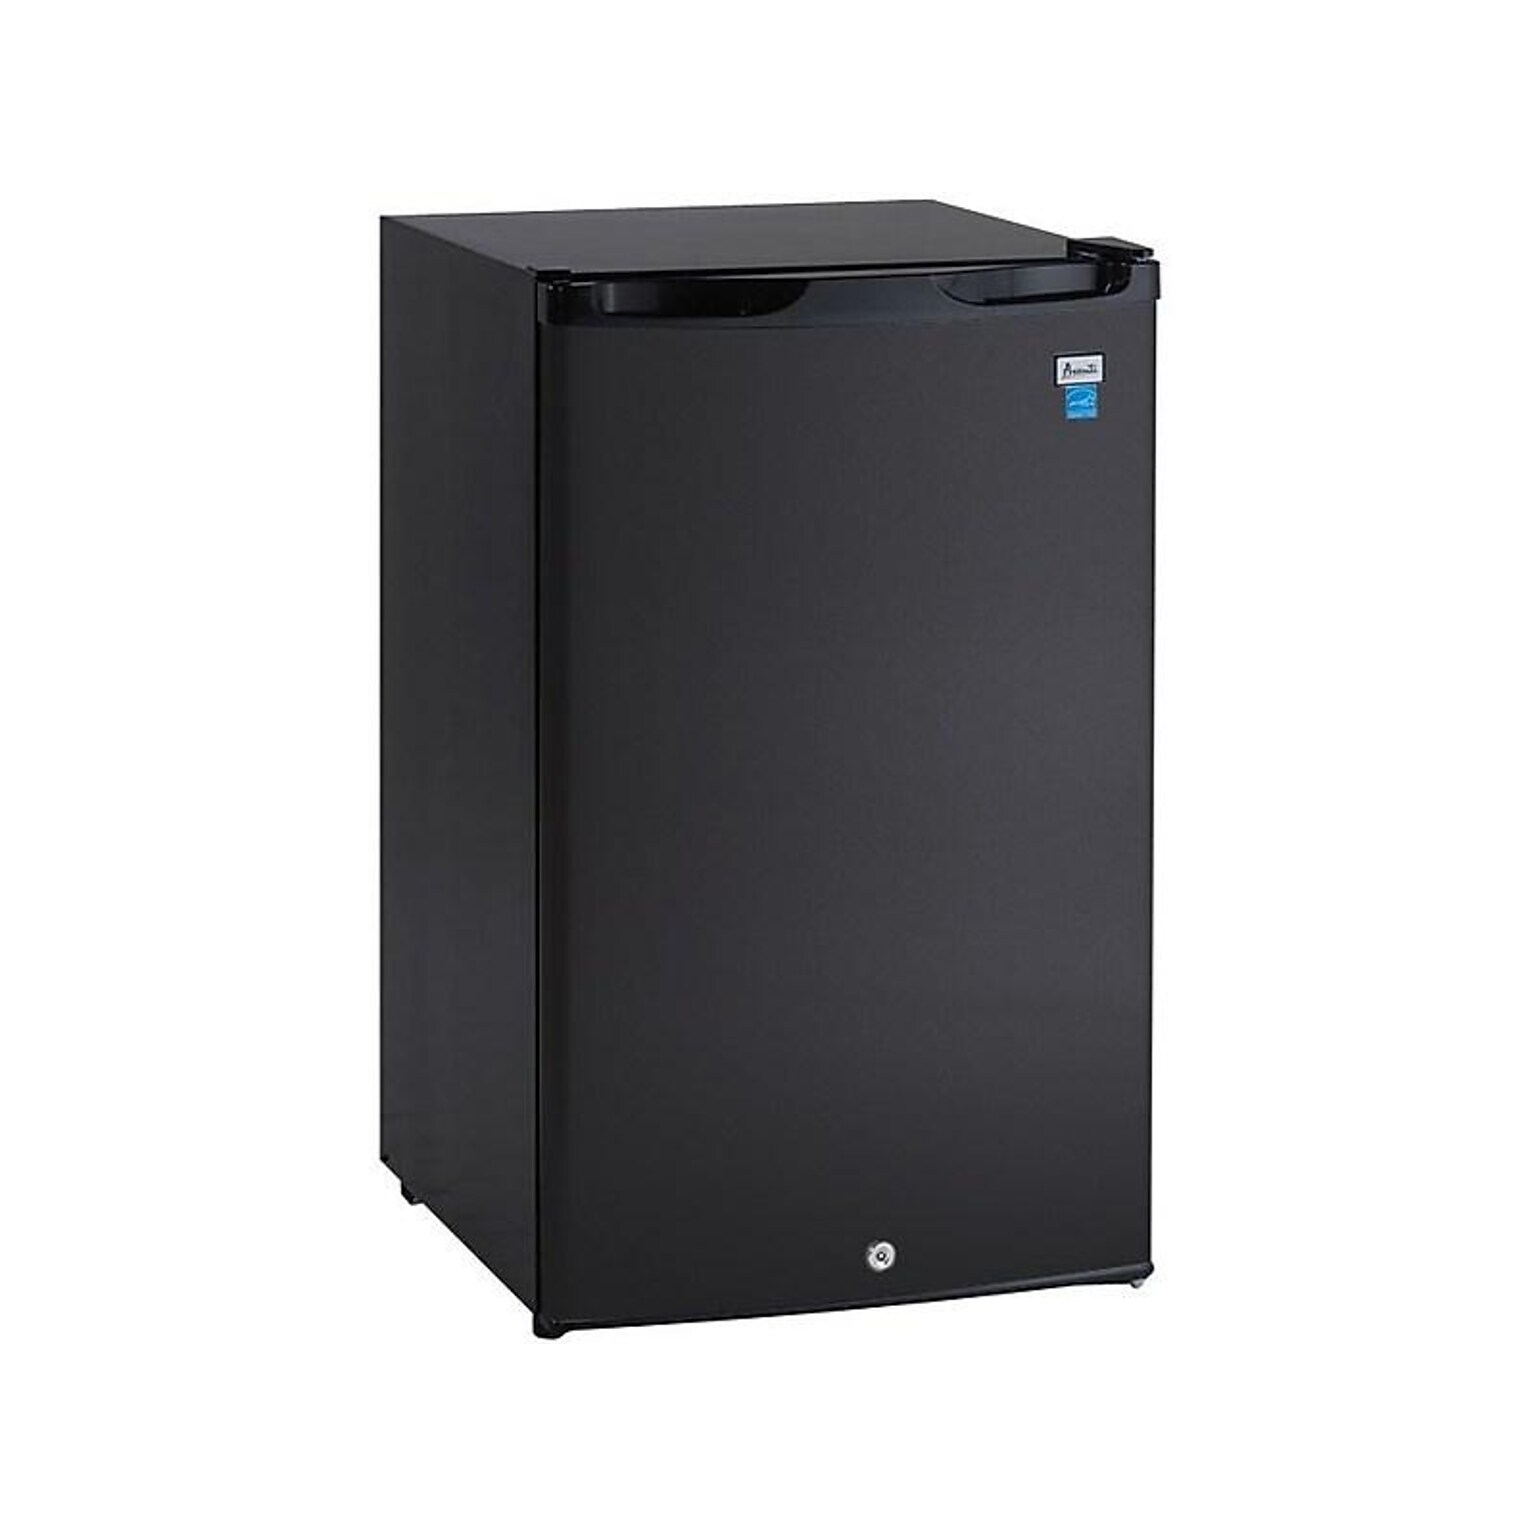 Avanti 4.4 Cu. Ft. Refrigerator, Black (AR4446B)